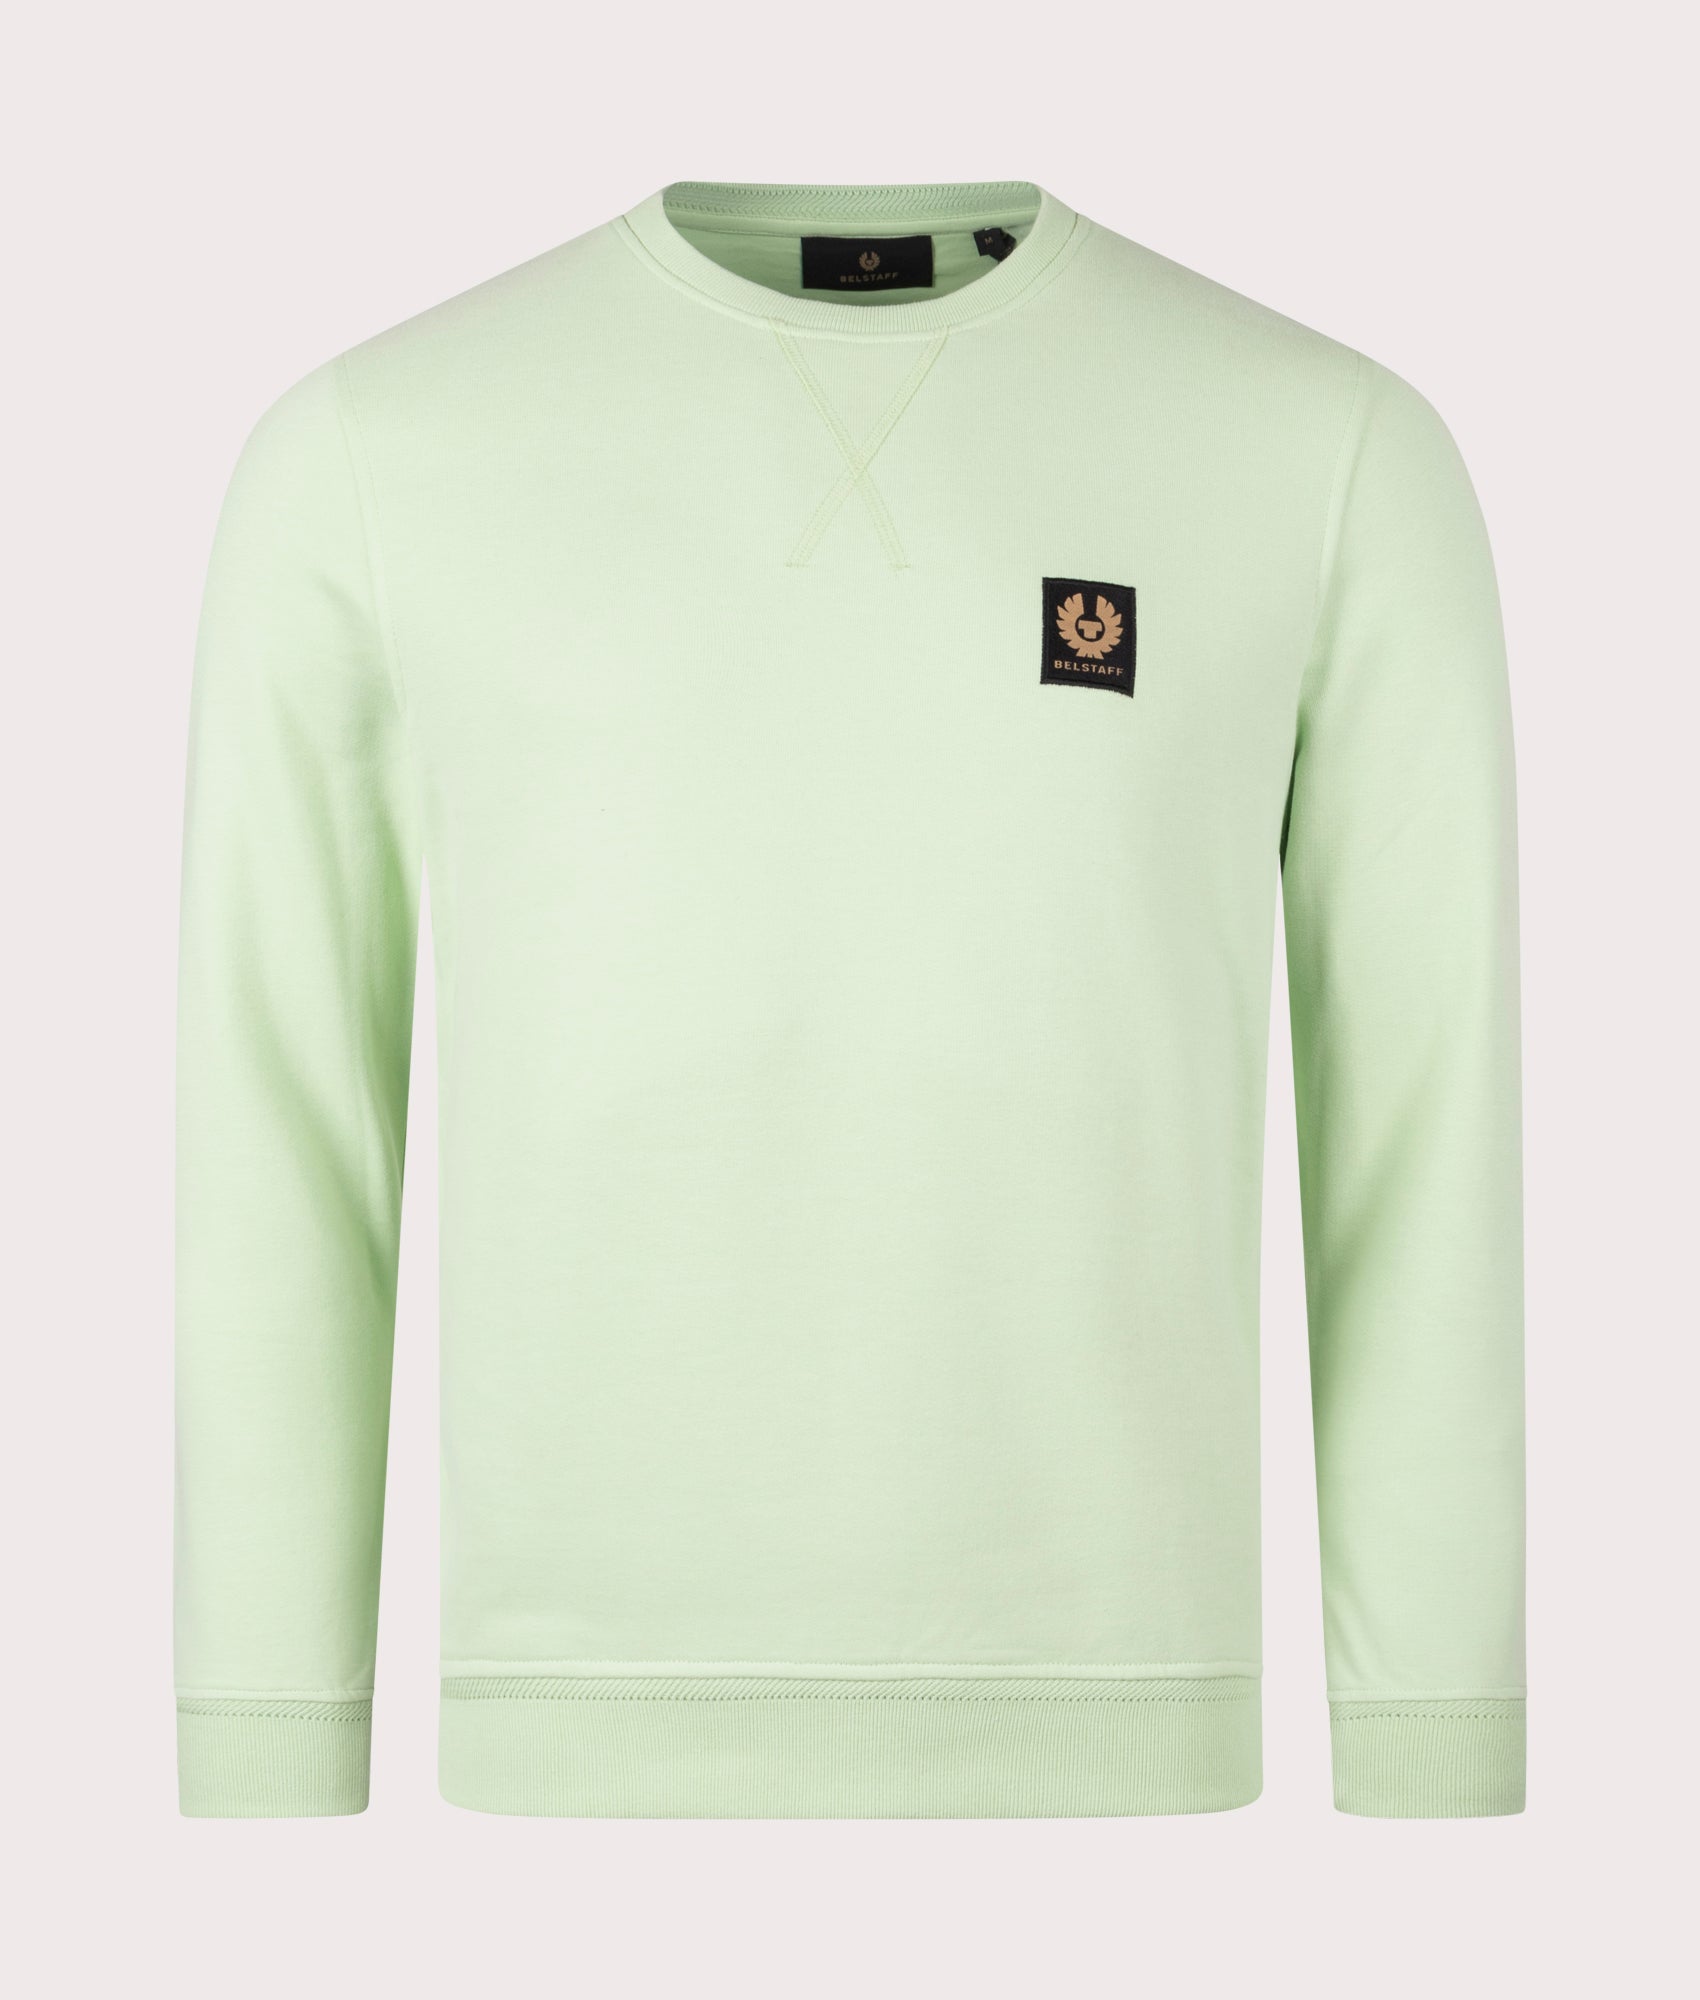 Belstaff Mens Belstaff Sweatshirt - Colour: New Leaf Green - Size: Large